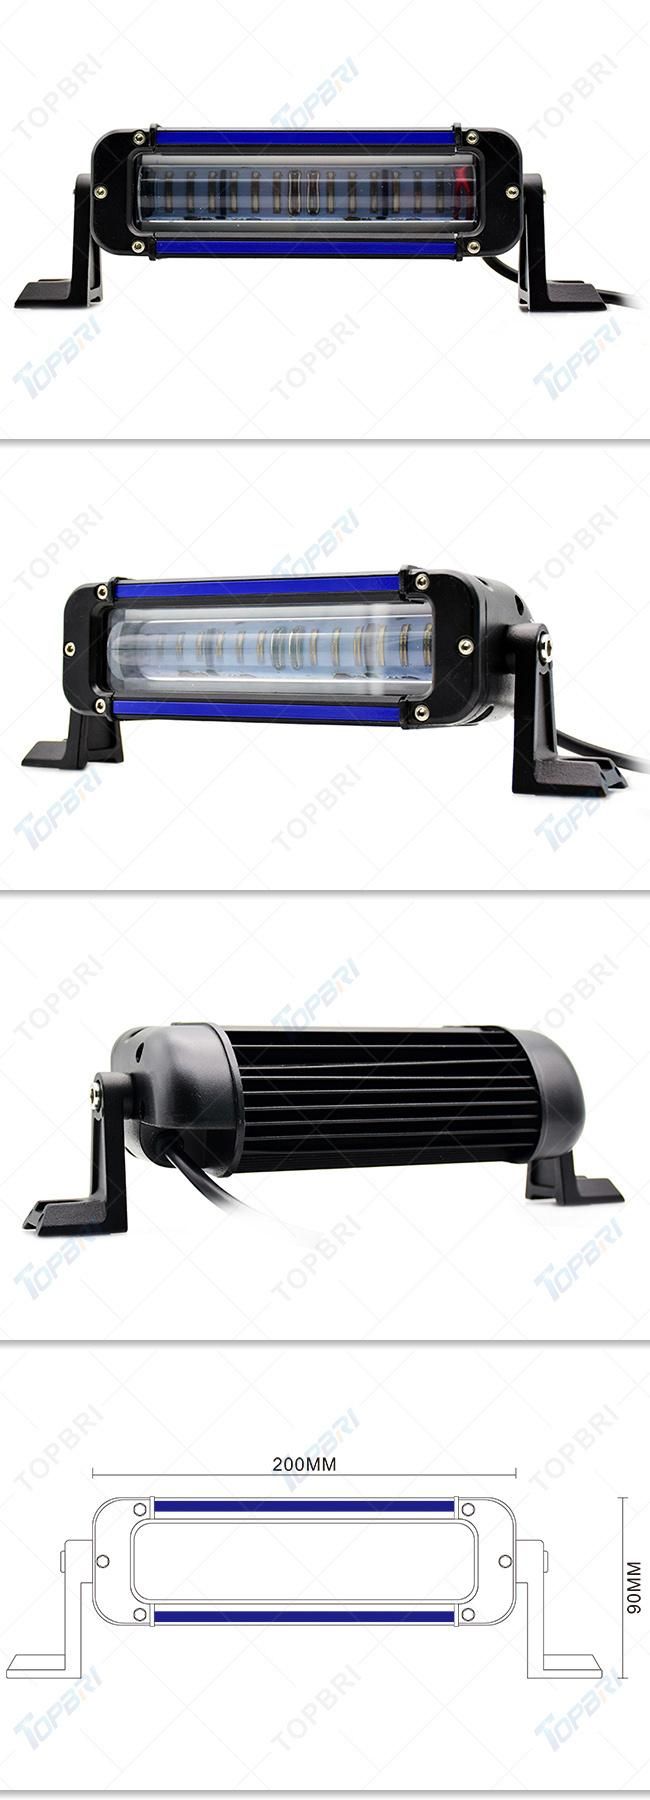 Automobile Lighting 12V Motorcycle Driving Lamp 60W LED Forklift Auto Car Work Bar Lights